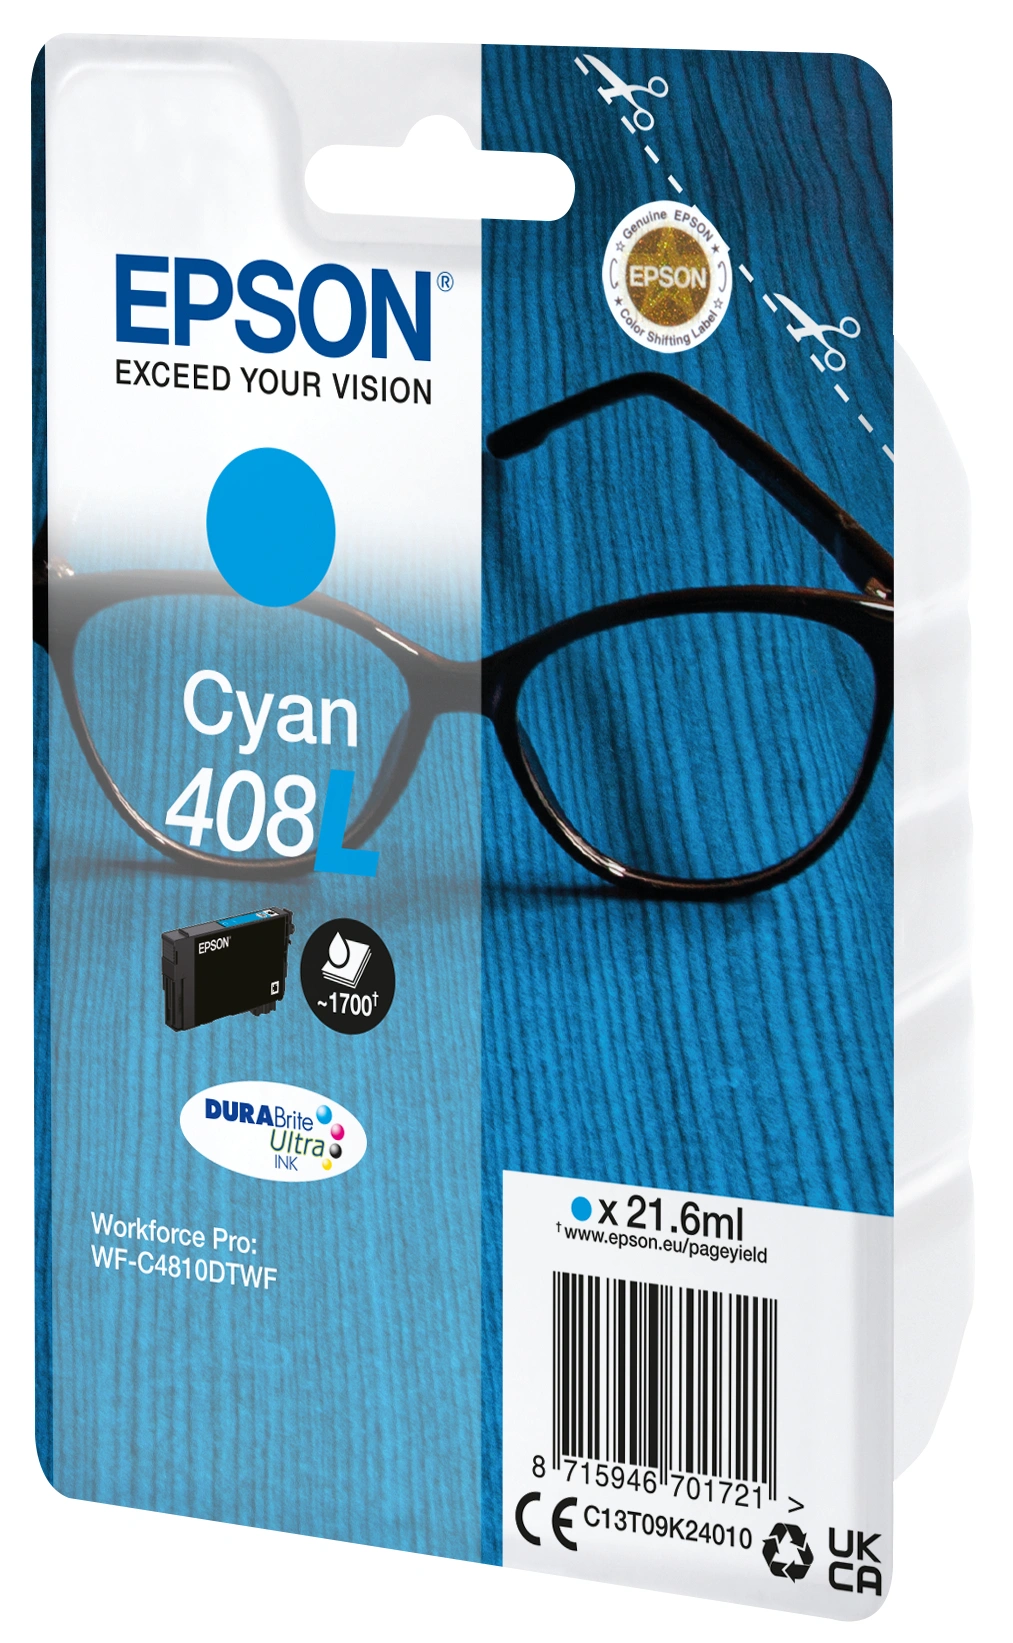 Epson Cyan 408L DURABrite Ultra Ink